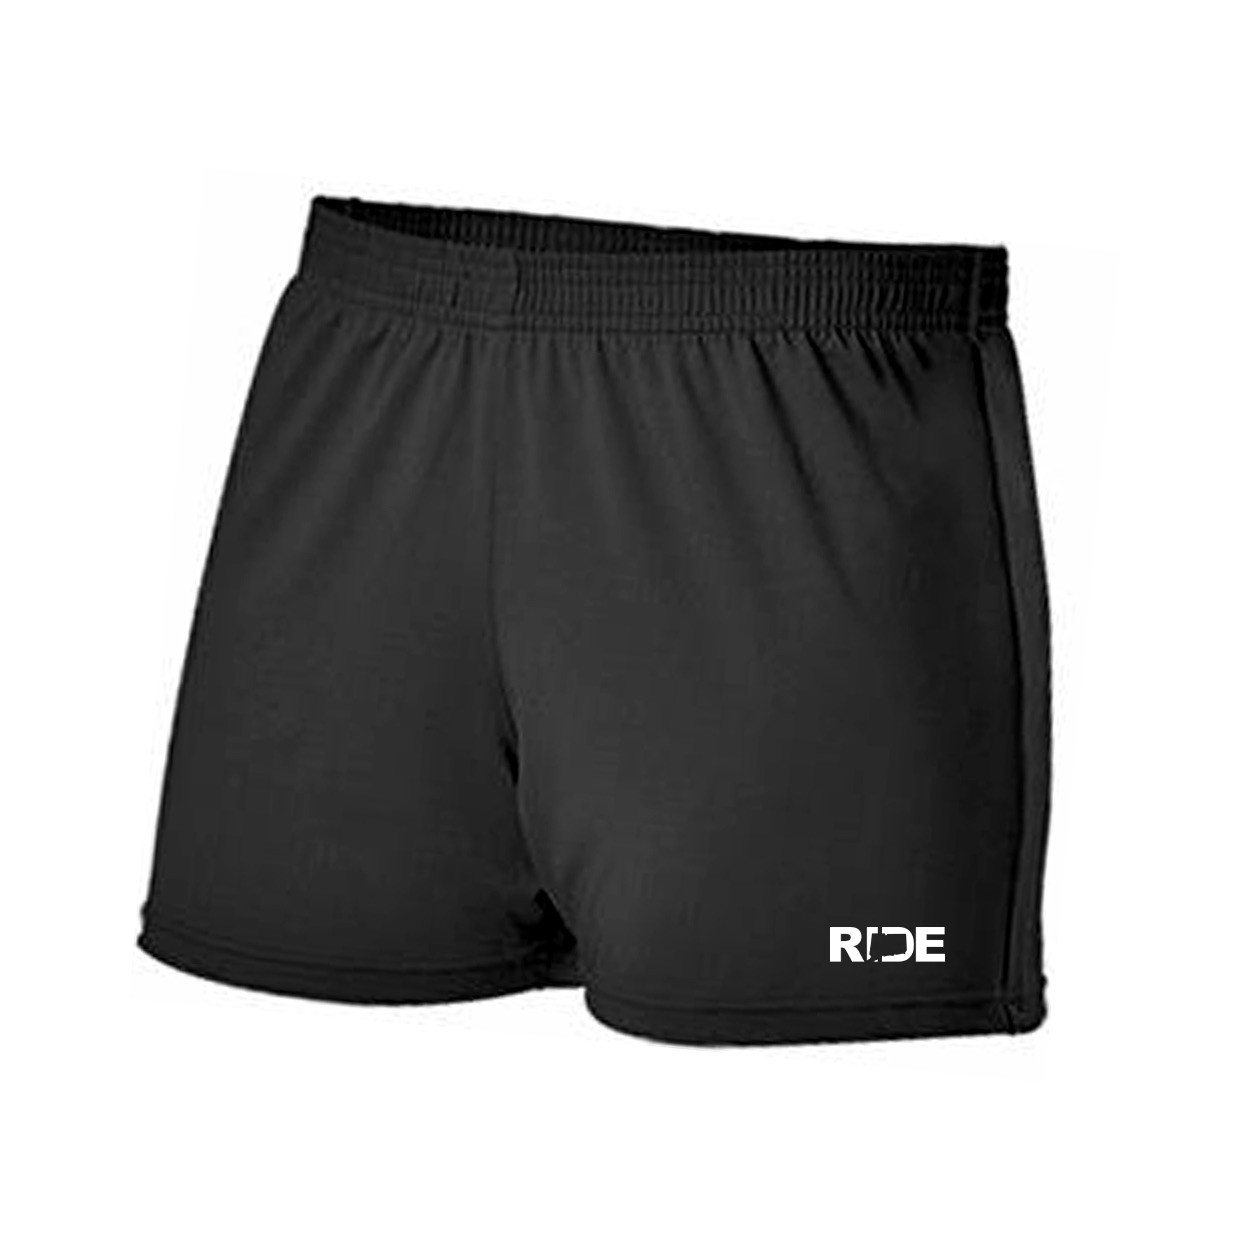 Ride Connecticut Classic Women's Cheer Shorts Black (White Logo)